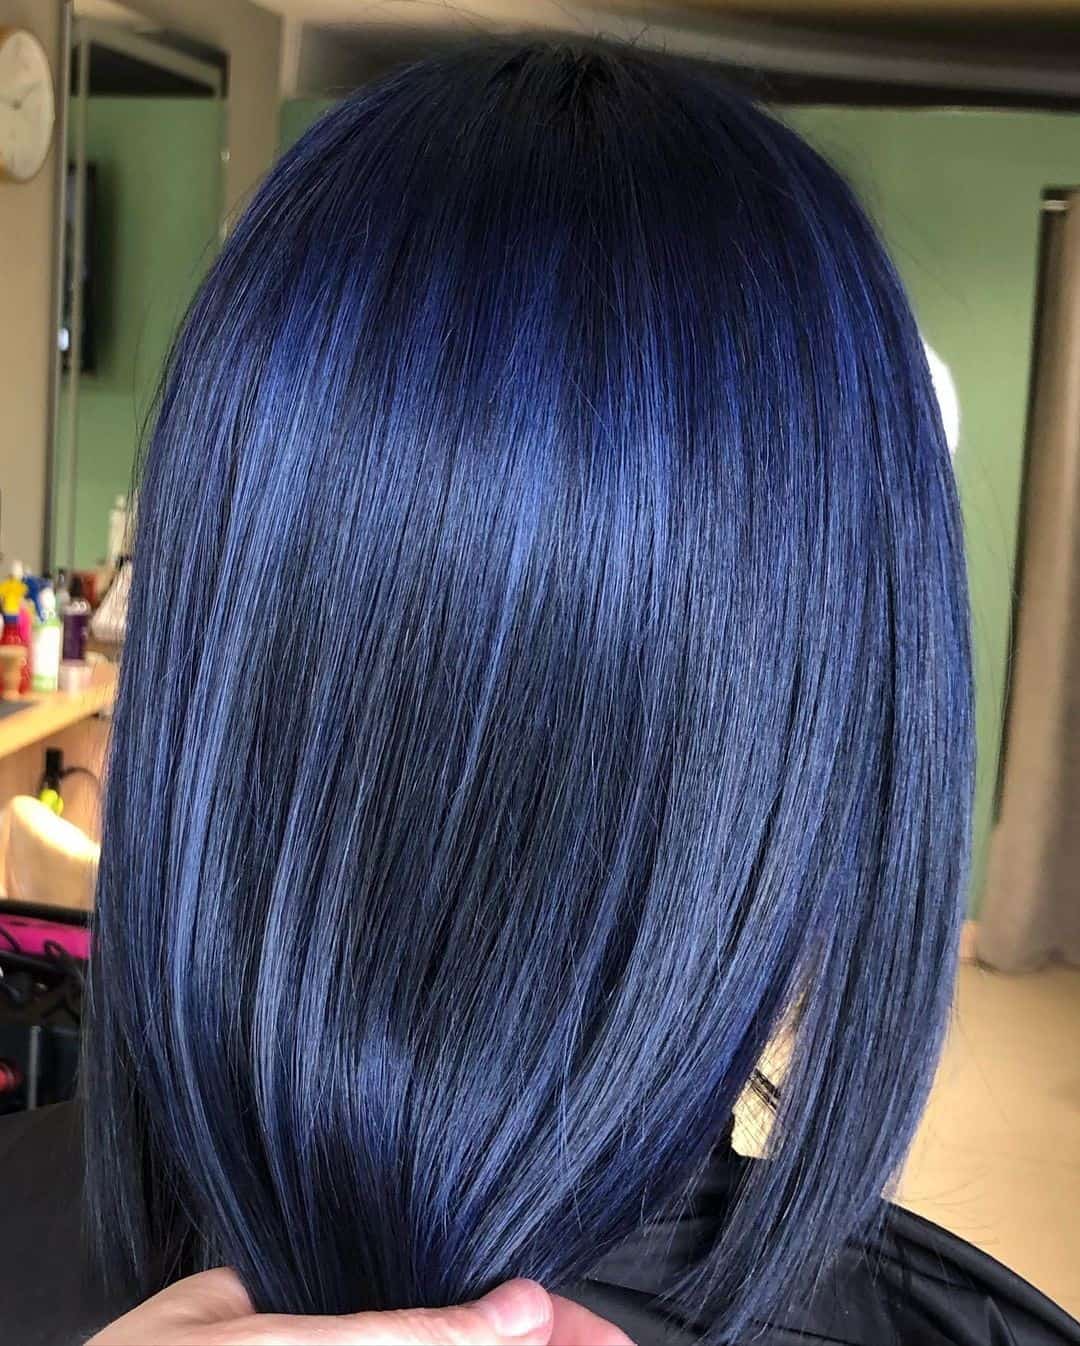 Straight & Silky Black And Blue Hair